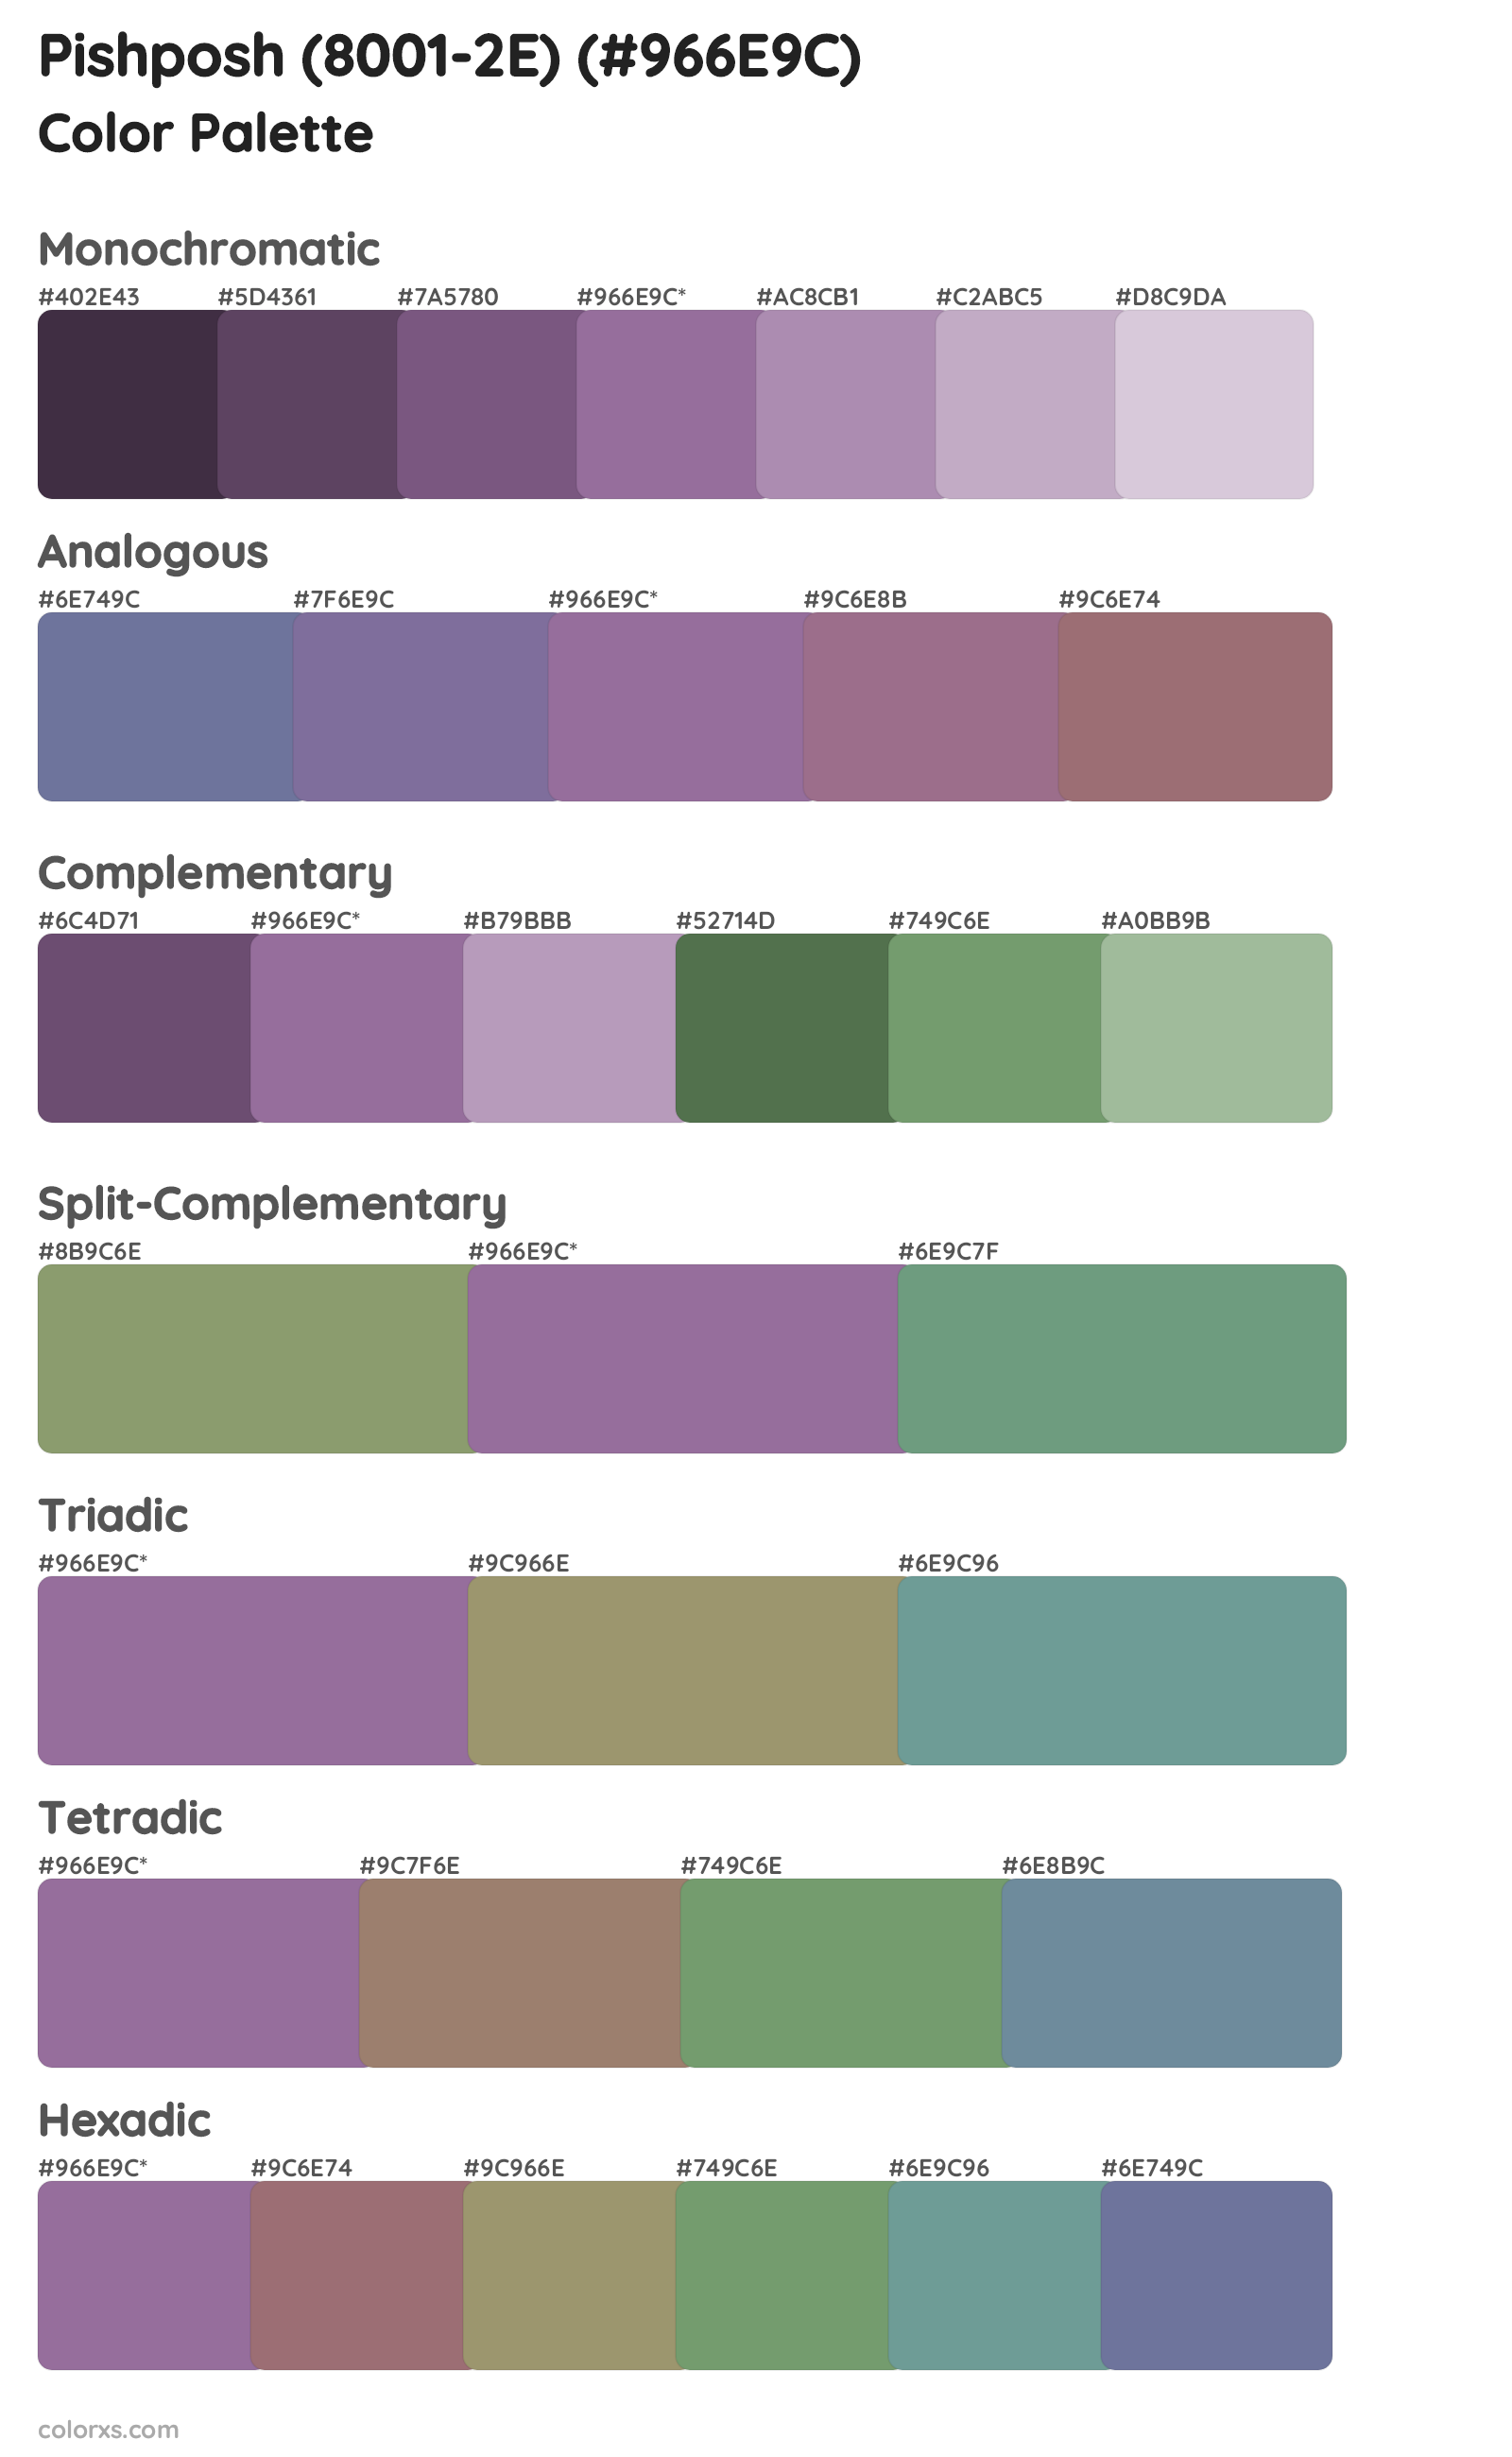 Pishposh (8001-2E) Color Scheme Palettes